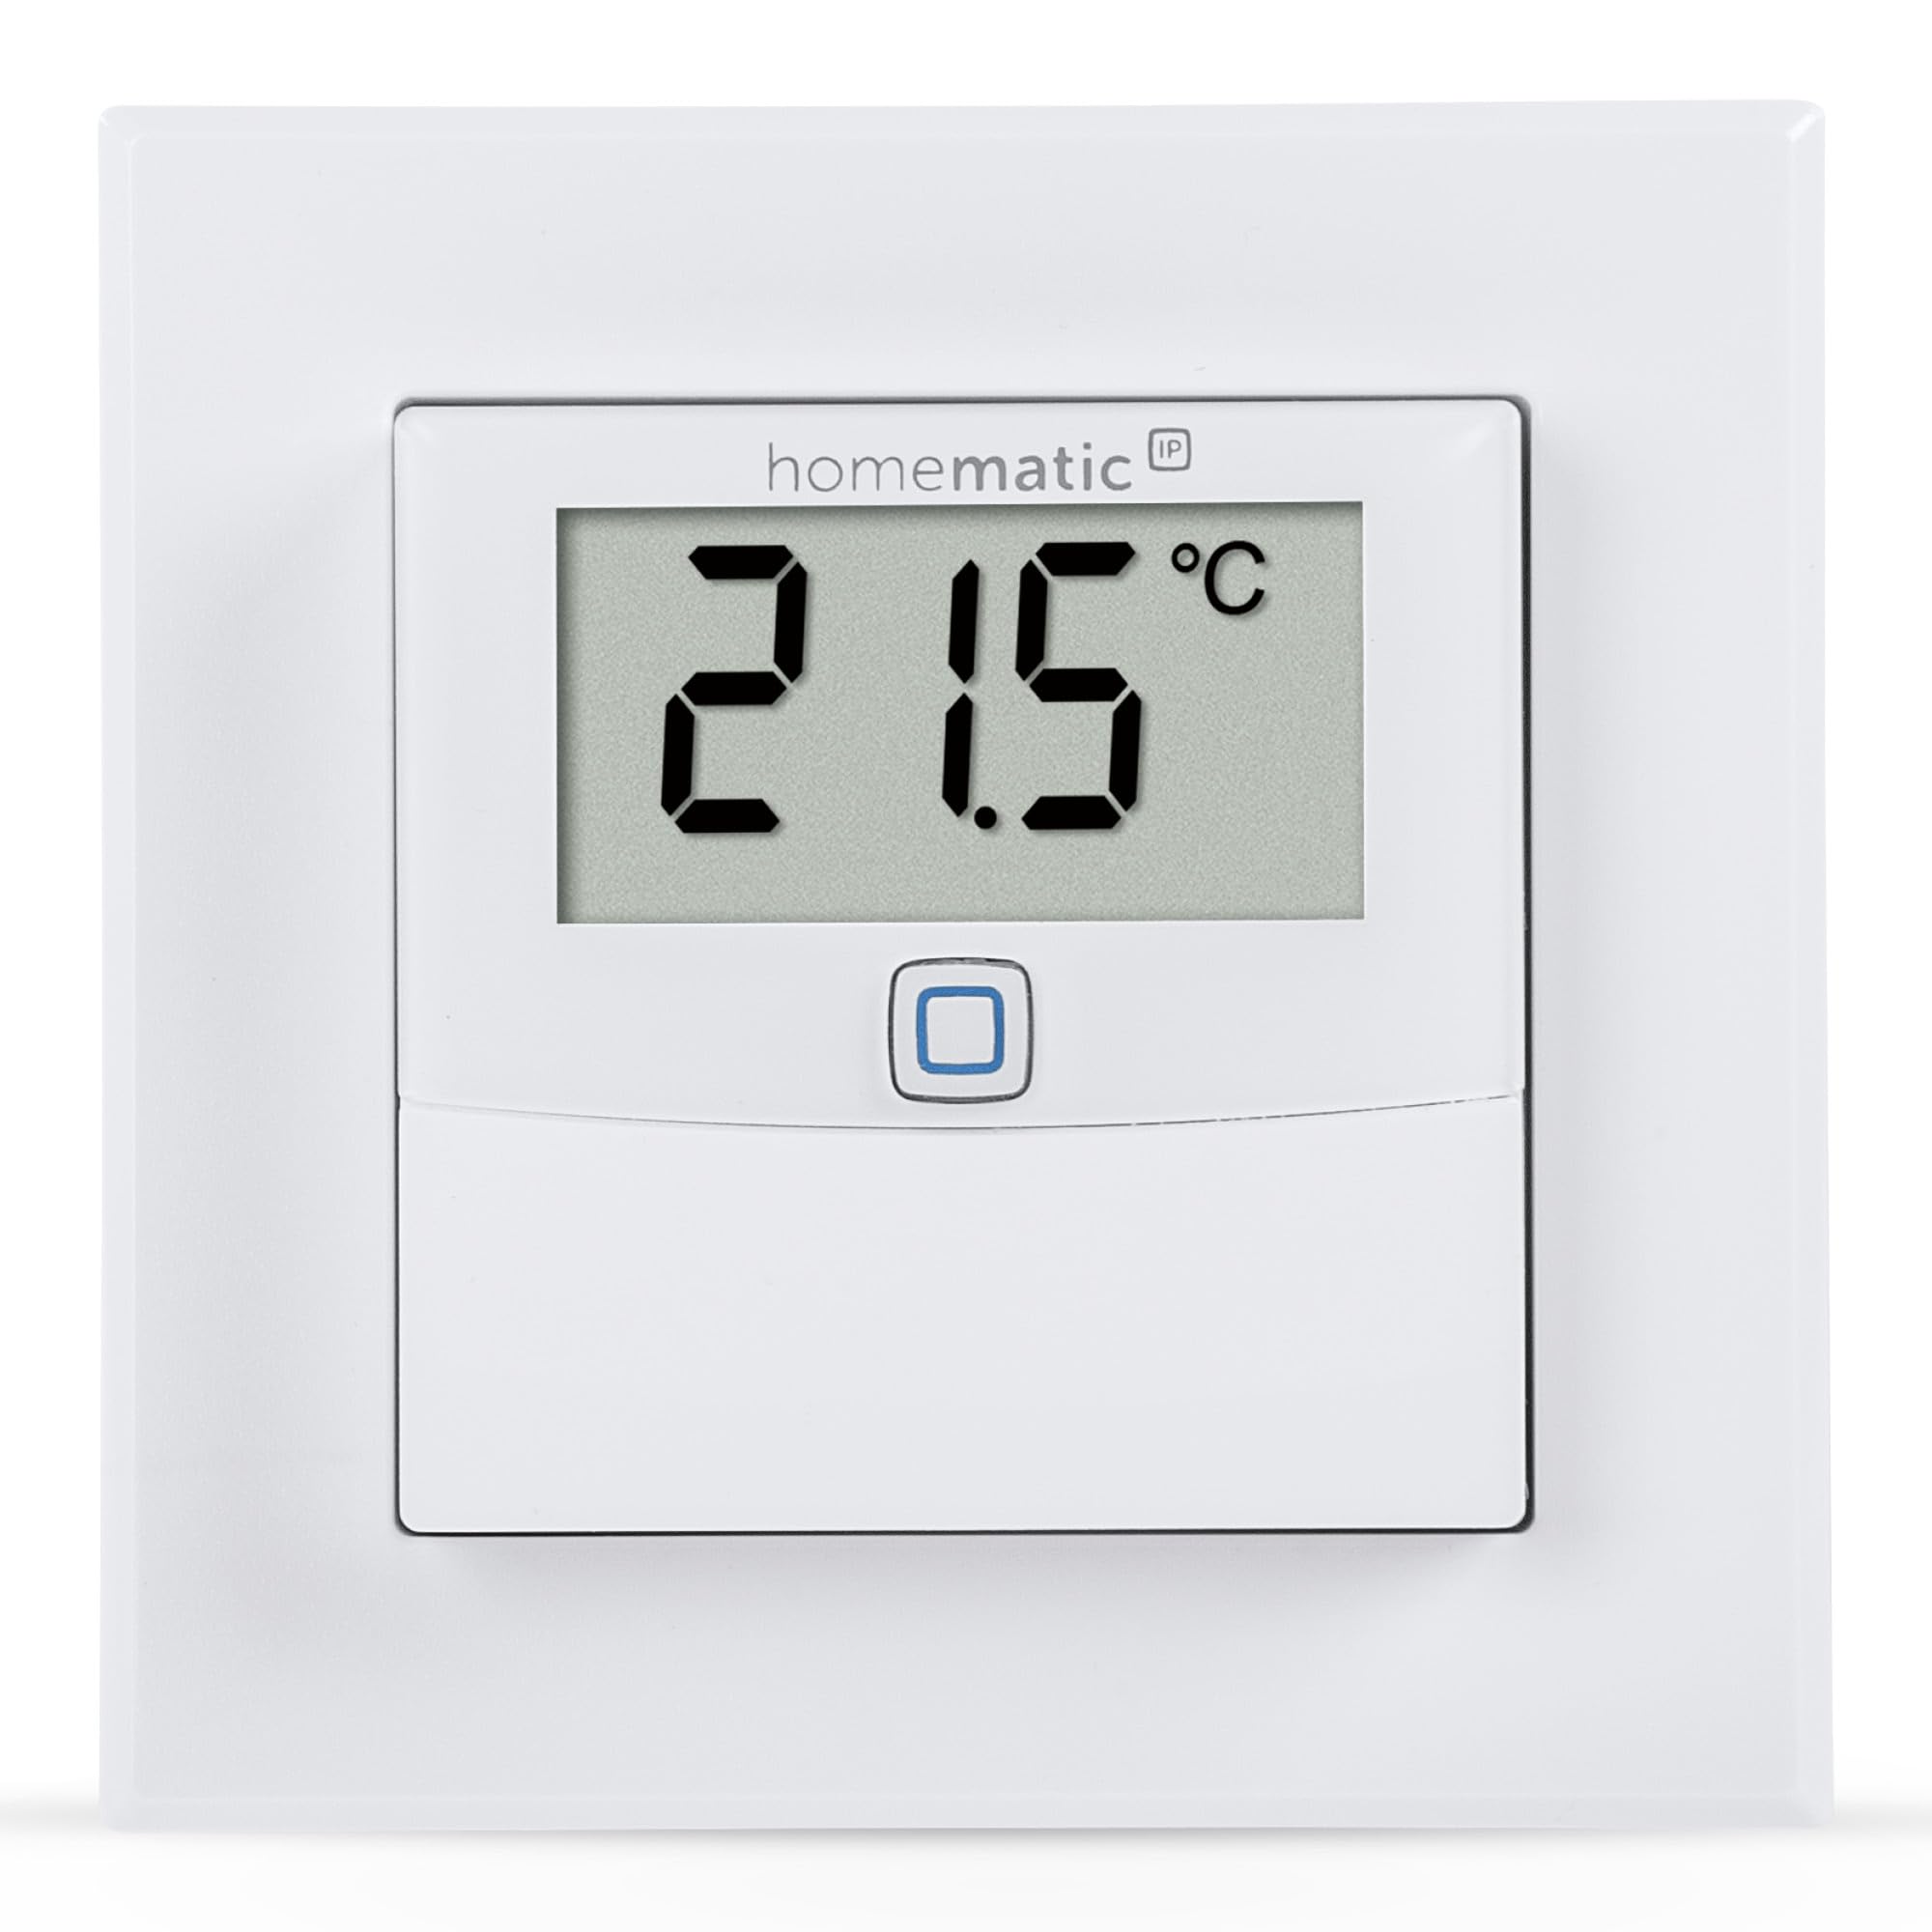 Homematic IP Smart Home Temperatur- und Luftfeuchtigkeitssensor mit Display – innen, steuert Heizkörper/Fußbodenheizung per App, Alexa, Google Assistant, Temperaturmessung, Energie sparen, 150180A0